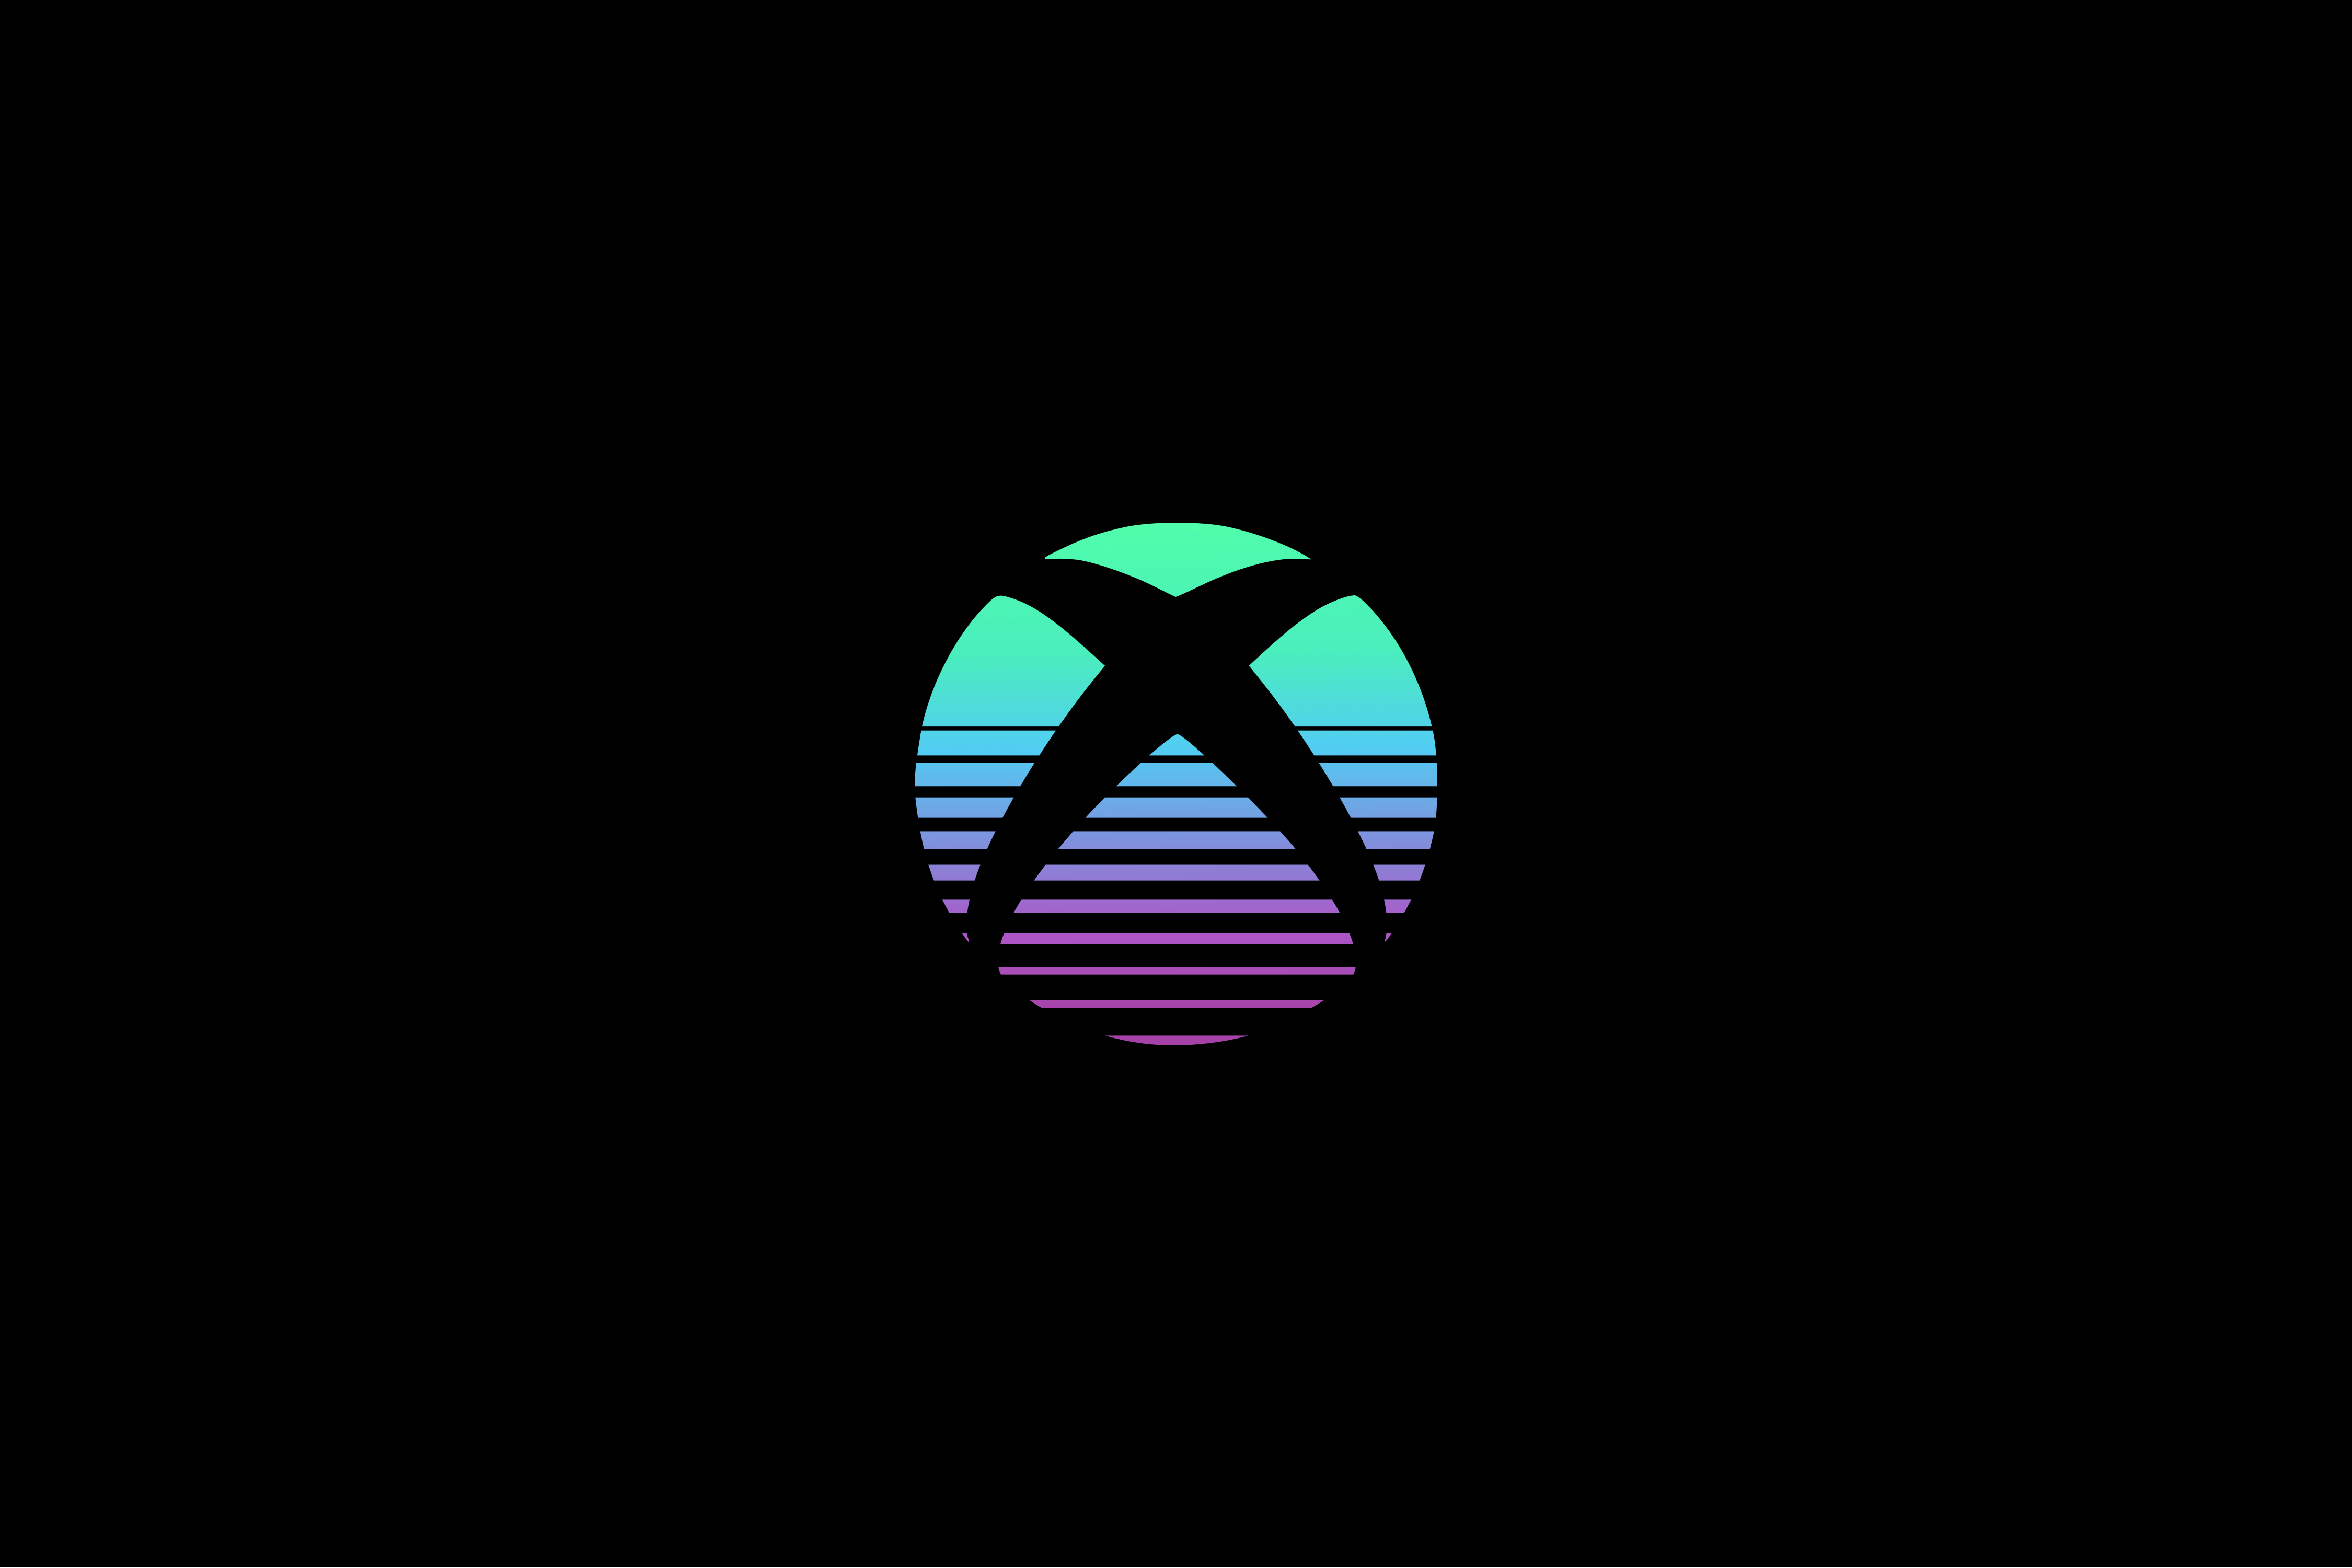 Xbox Microsoft Consoles Logo Retro Style Simple Background Gear Lines Black Dark 4500x3000